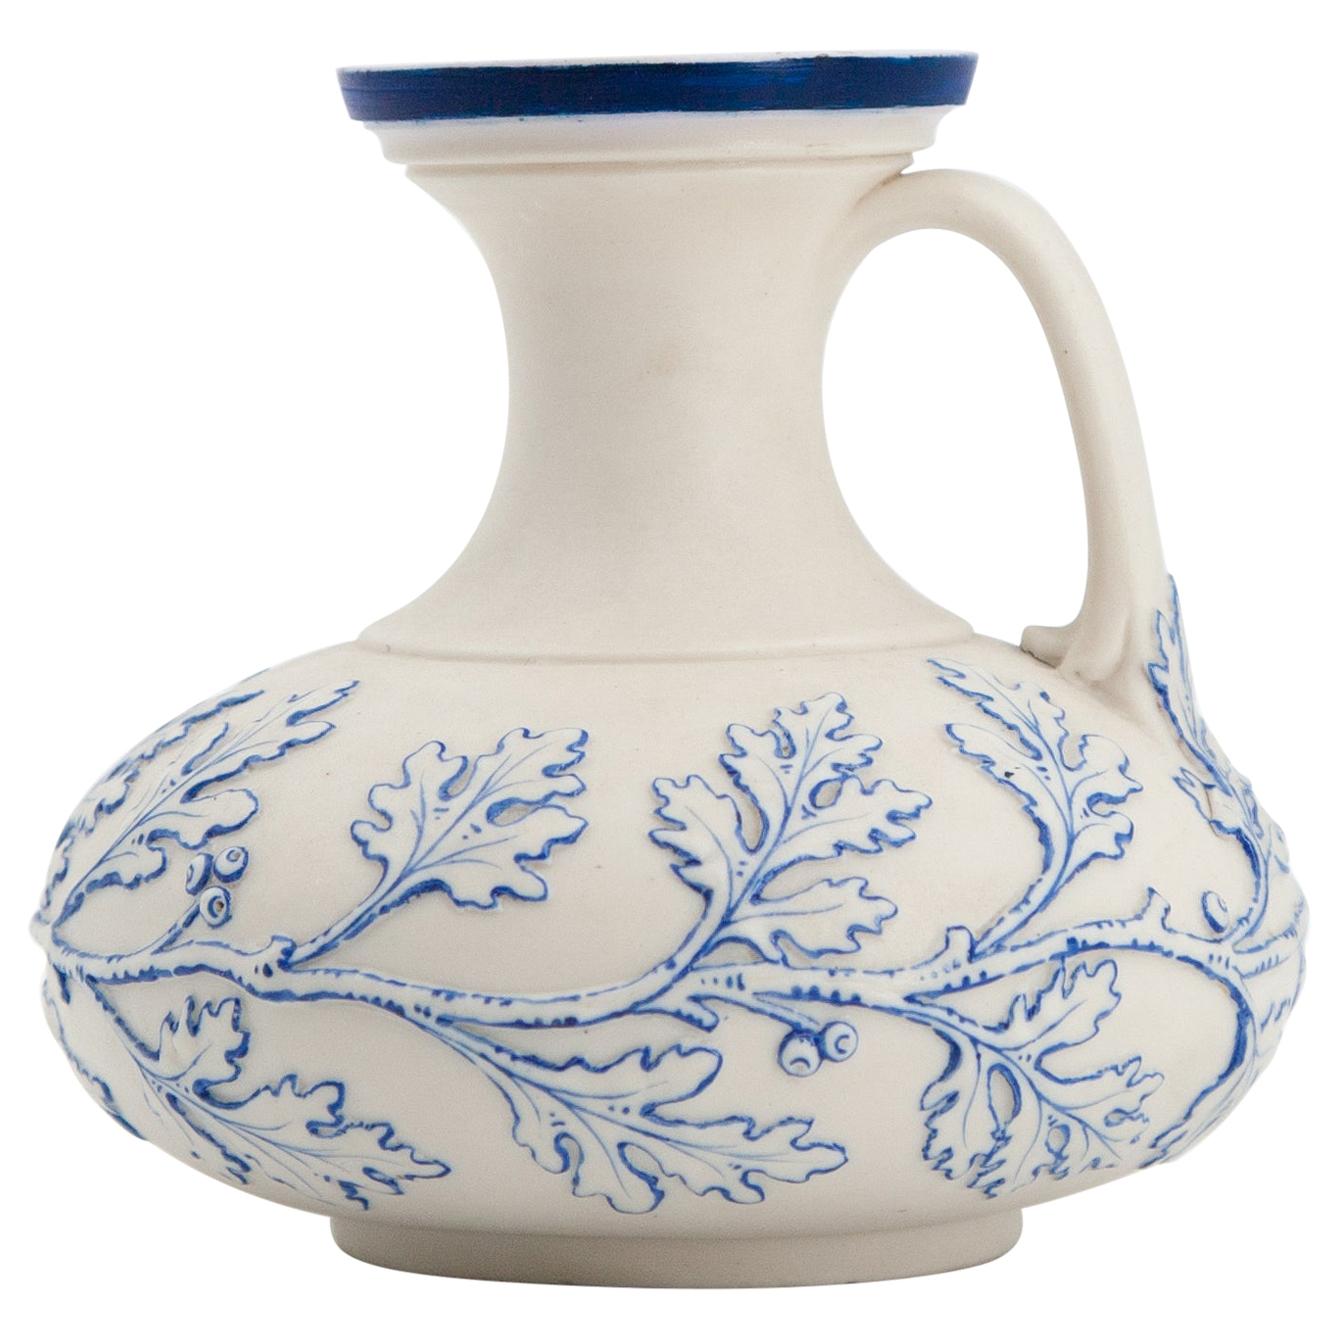 Early Grainger Worcester Porcelain Blue and White Vase